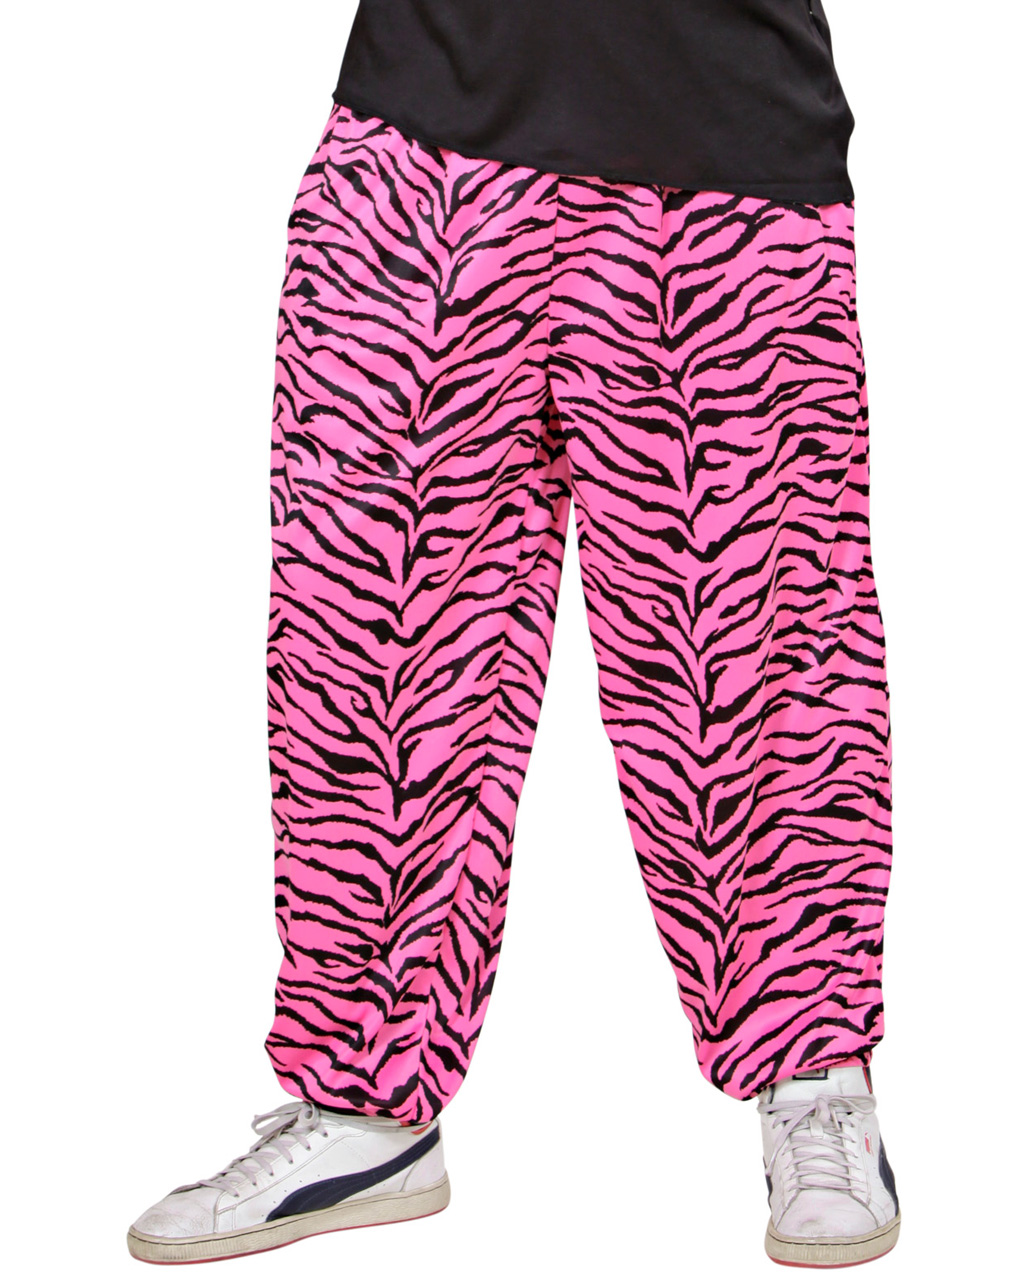 80's Pink Zebra Jogging Pants order